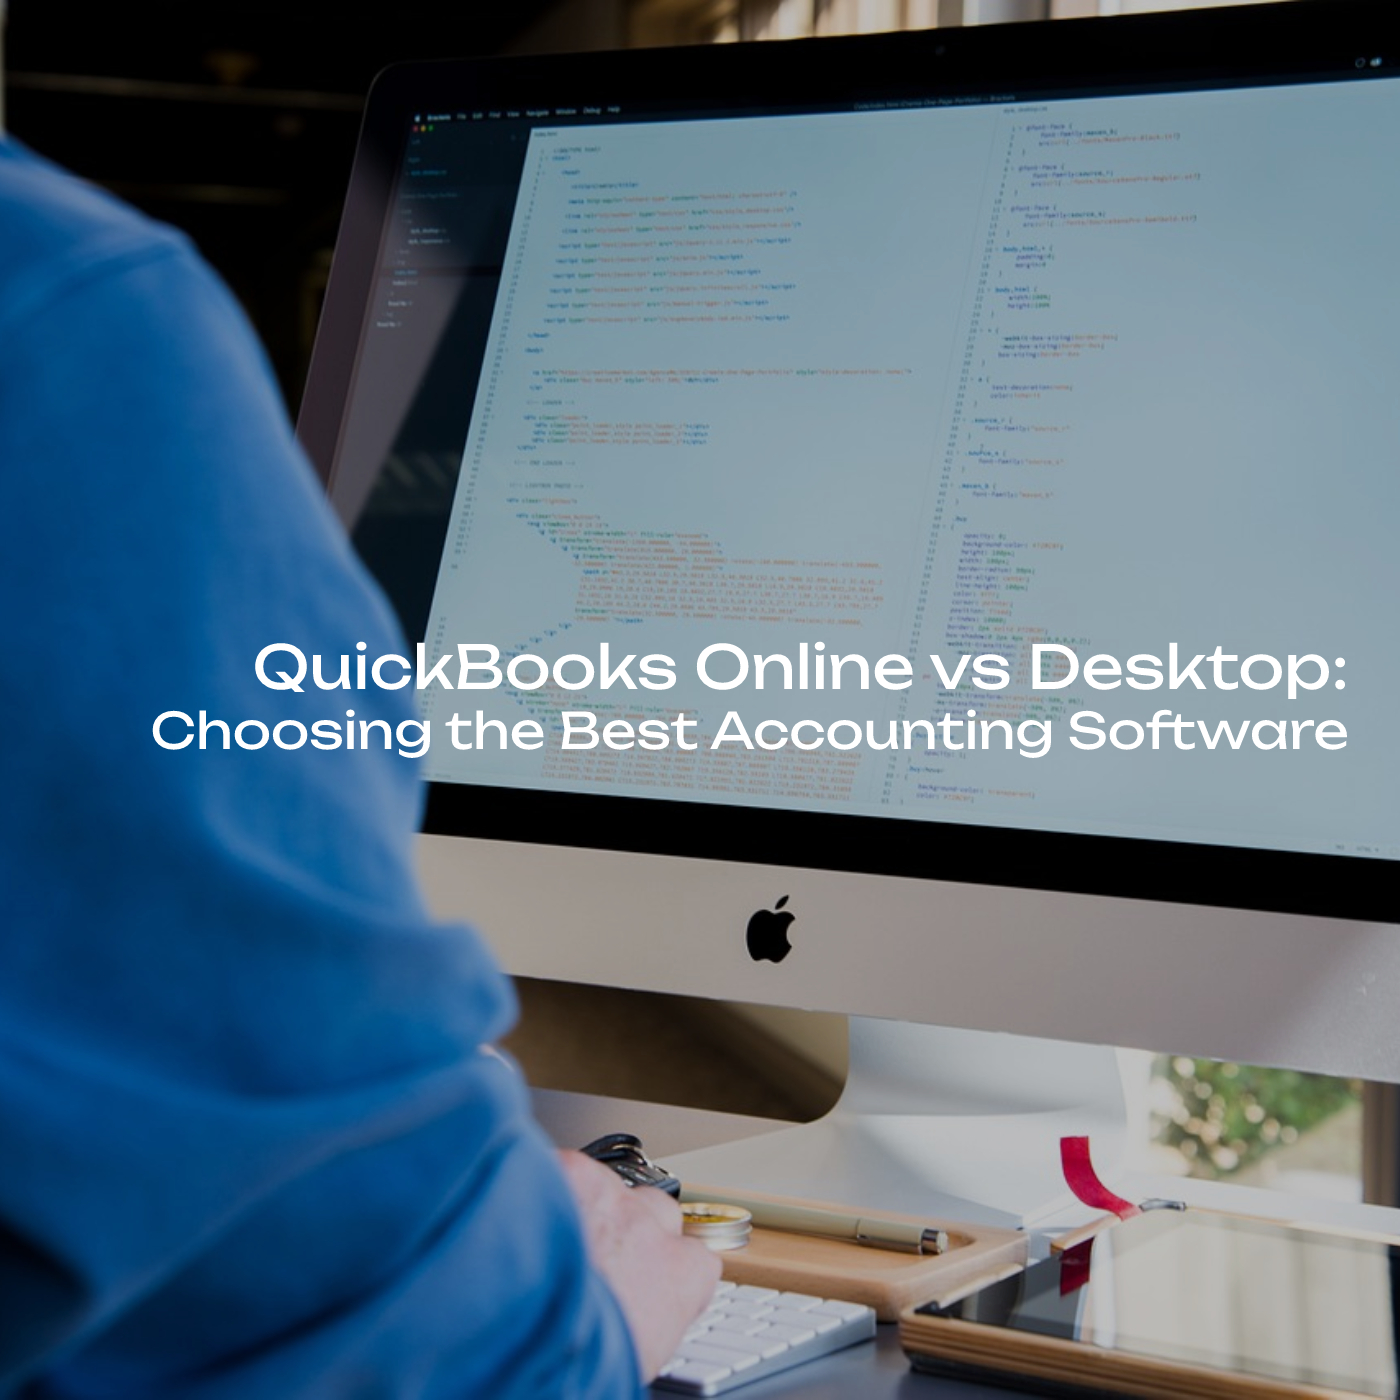 QuickBooks Online vs Desktop: Choosing the Best Accounting Software